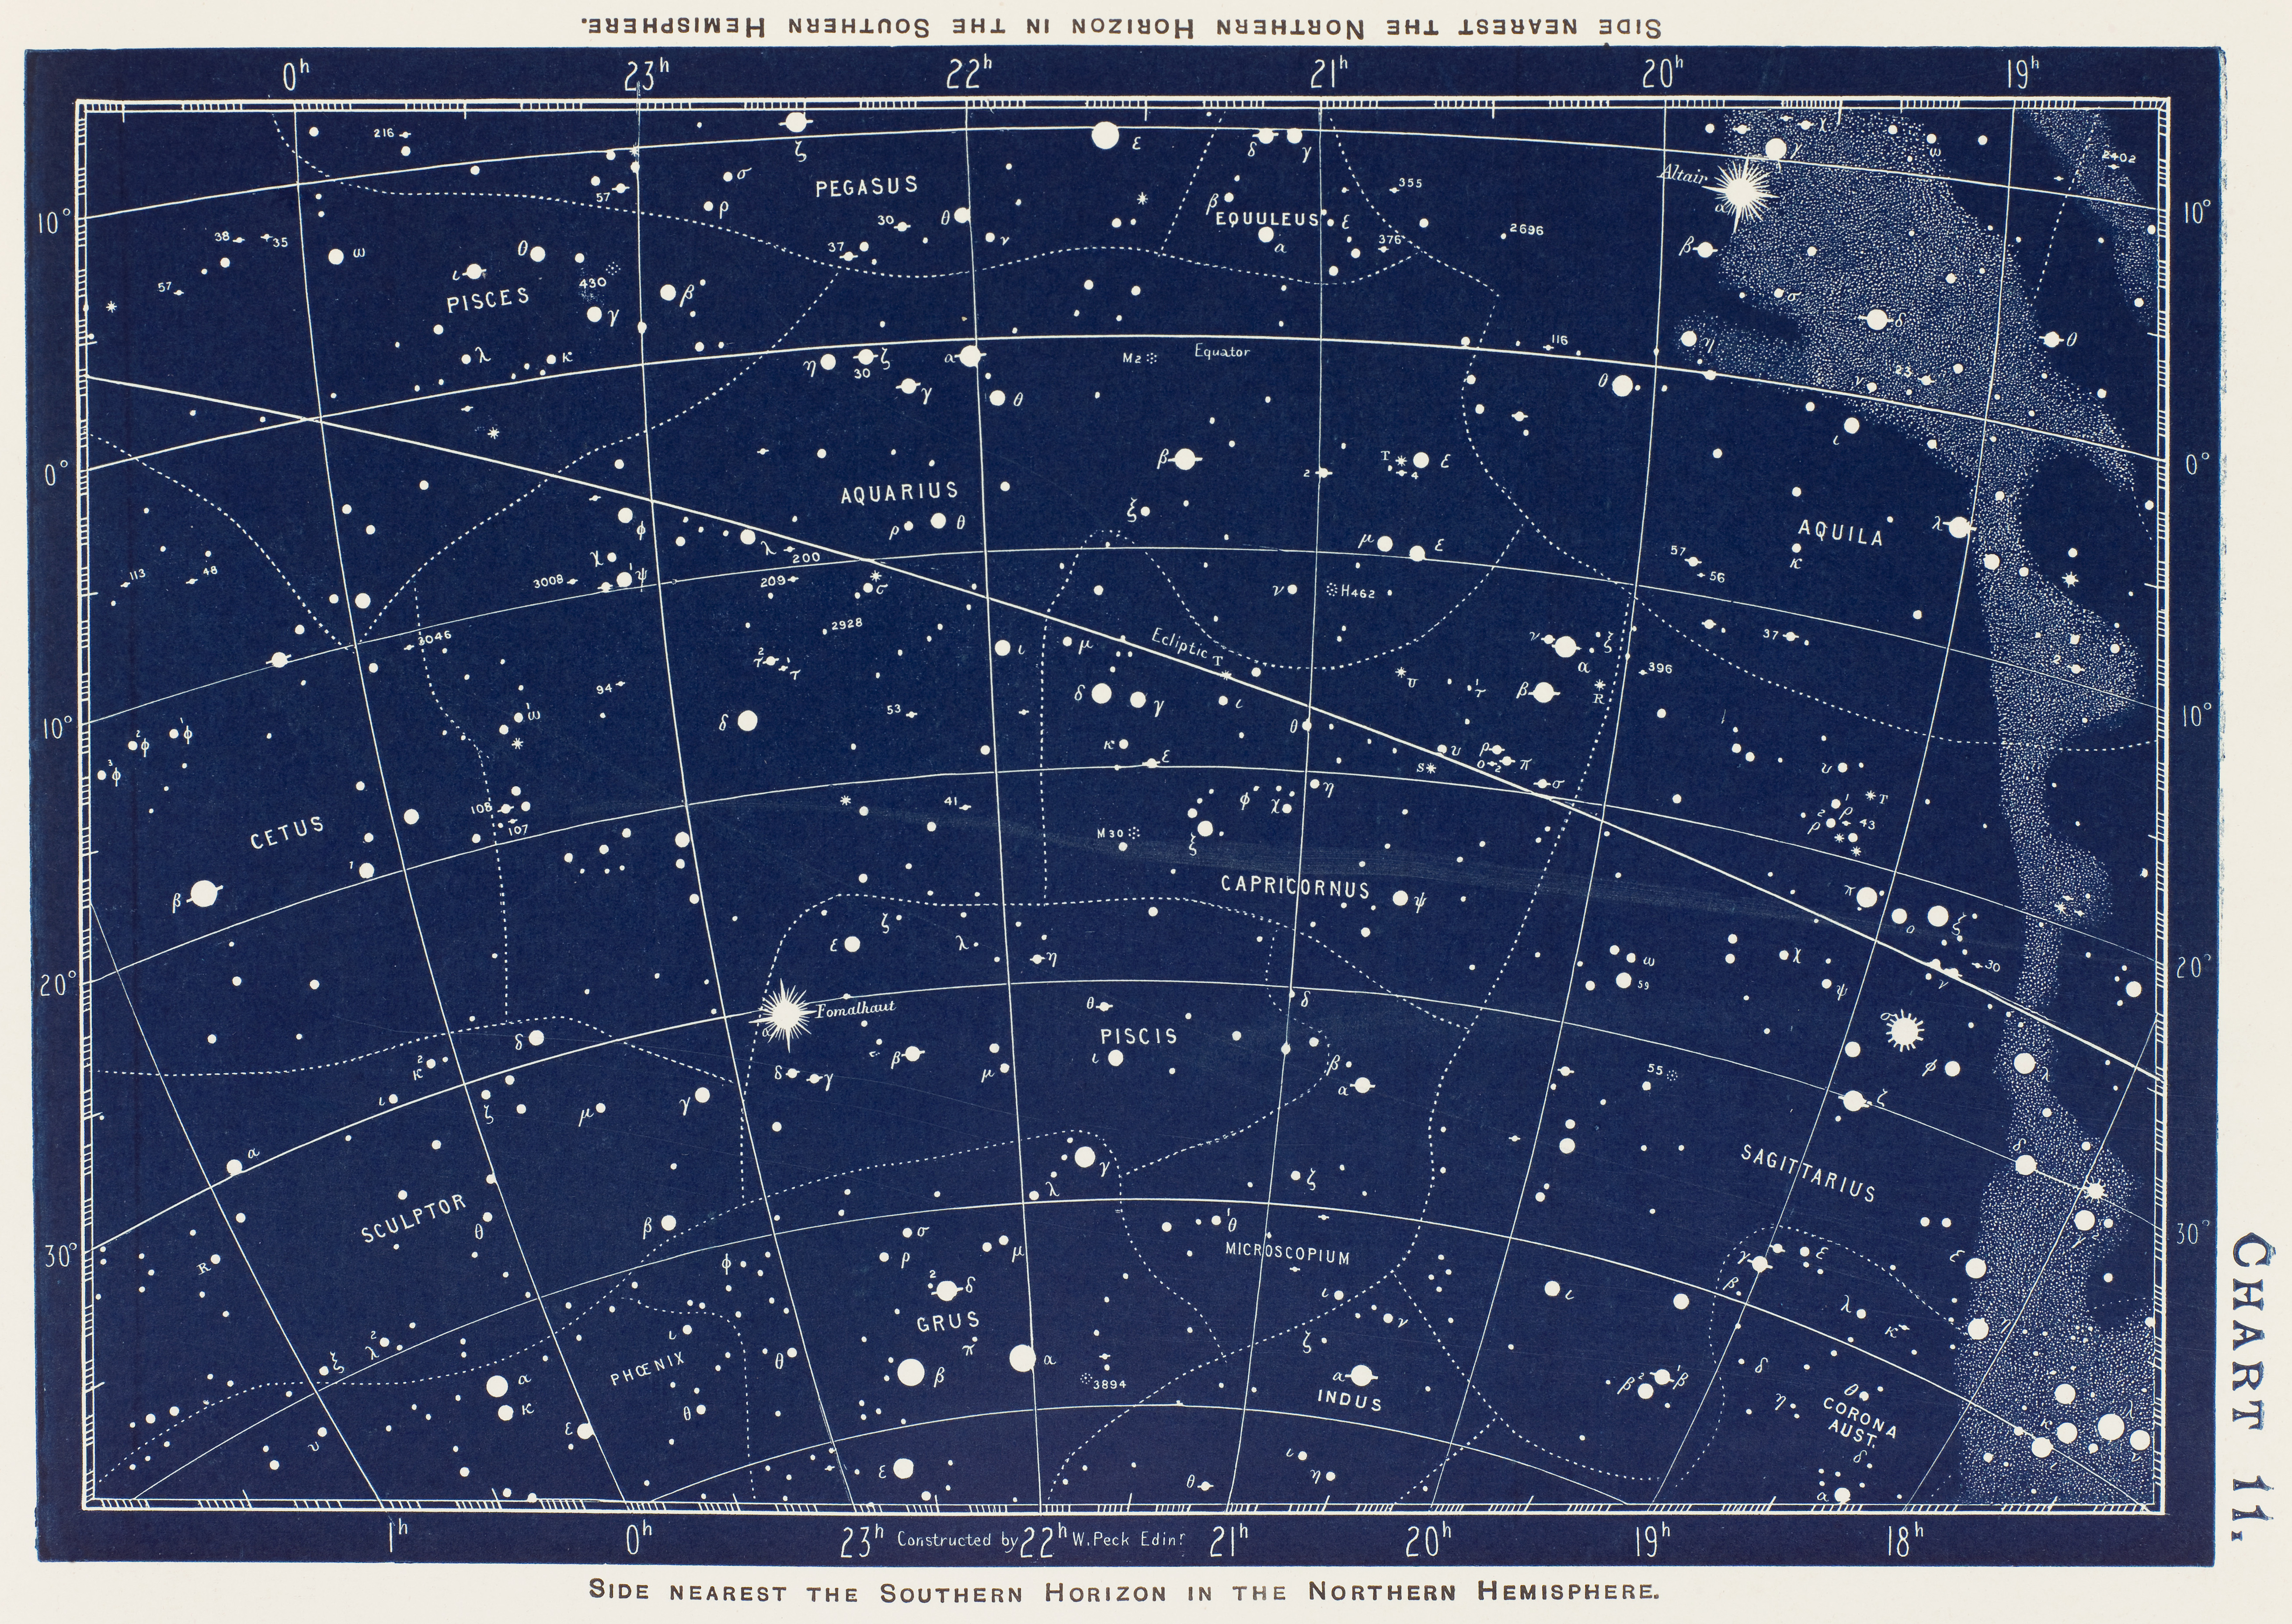 astronomy star charts night sky